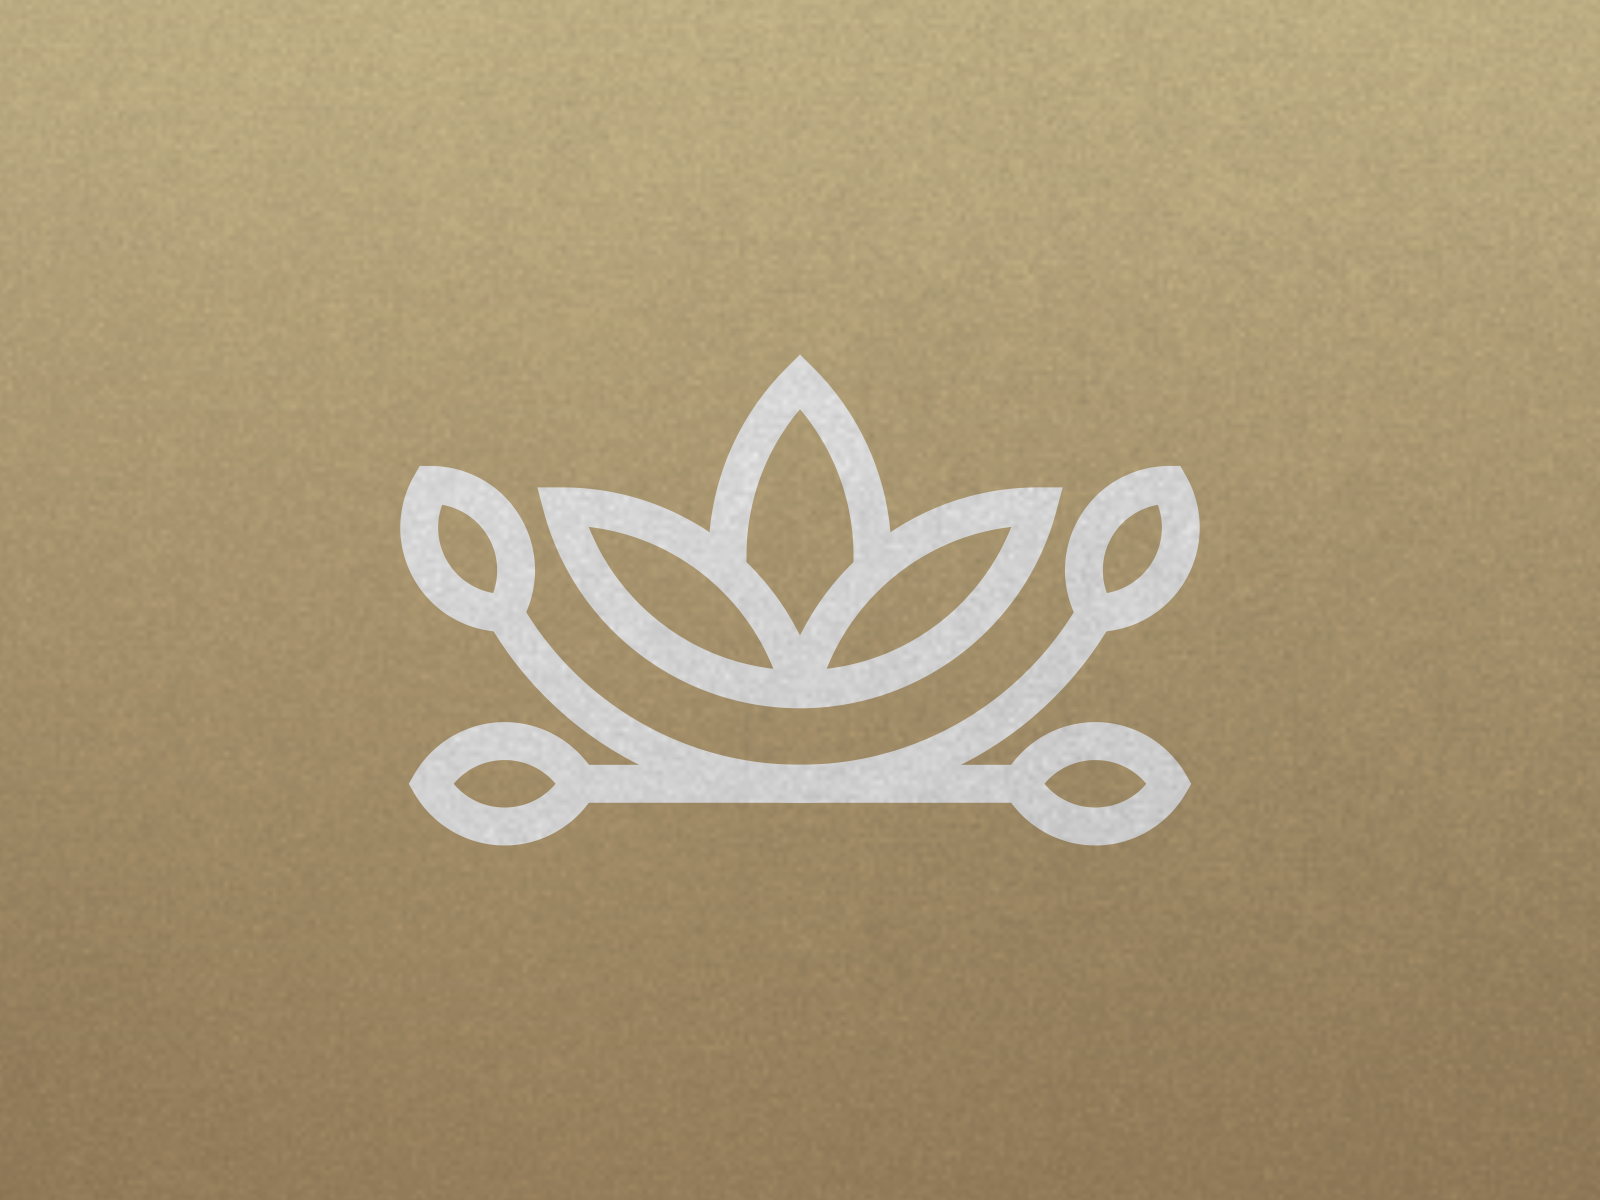 Spa business logo psd gold | Premium PSD - rawpixel